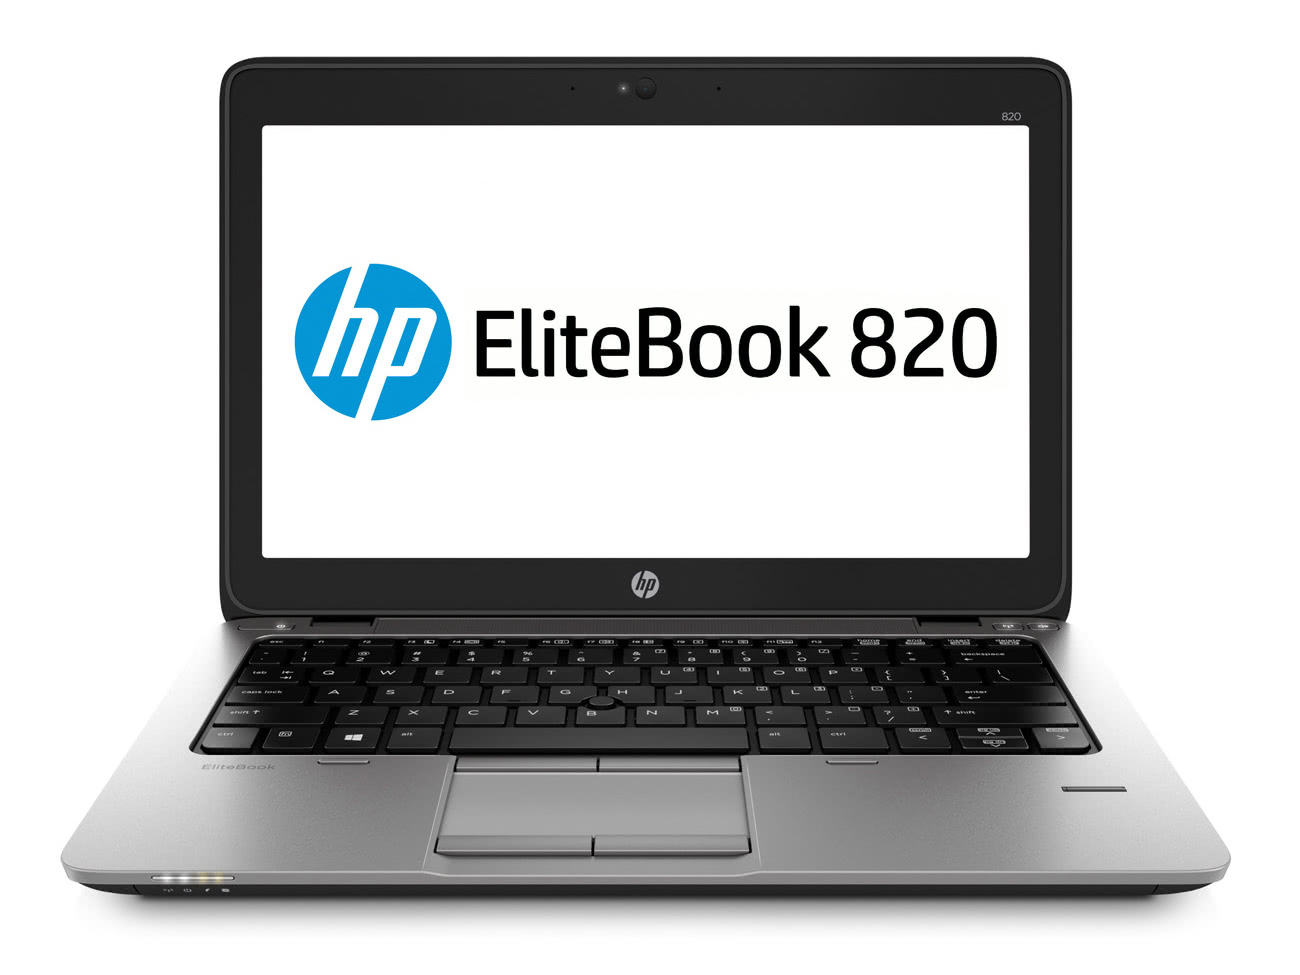 laptop hp elitebook 820 g2, intel core i5-5200u 2.20ghz, 8gb ddr3, 128gb ssd